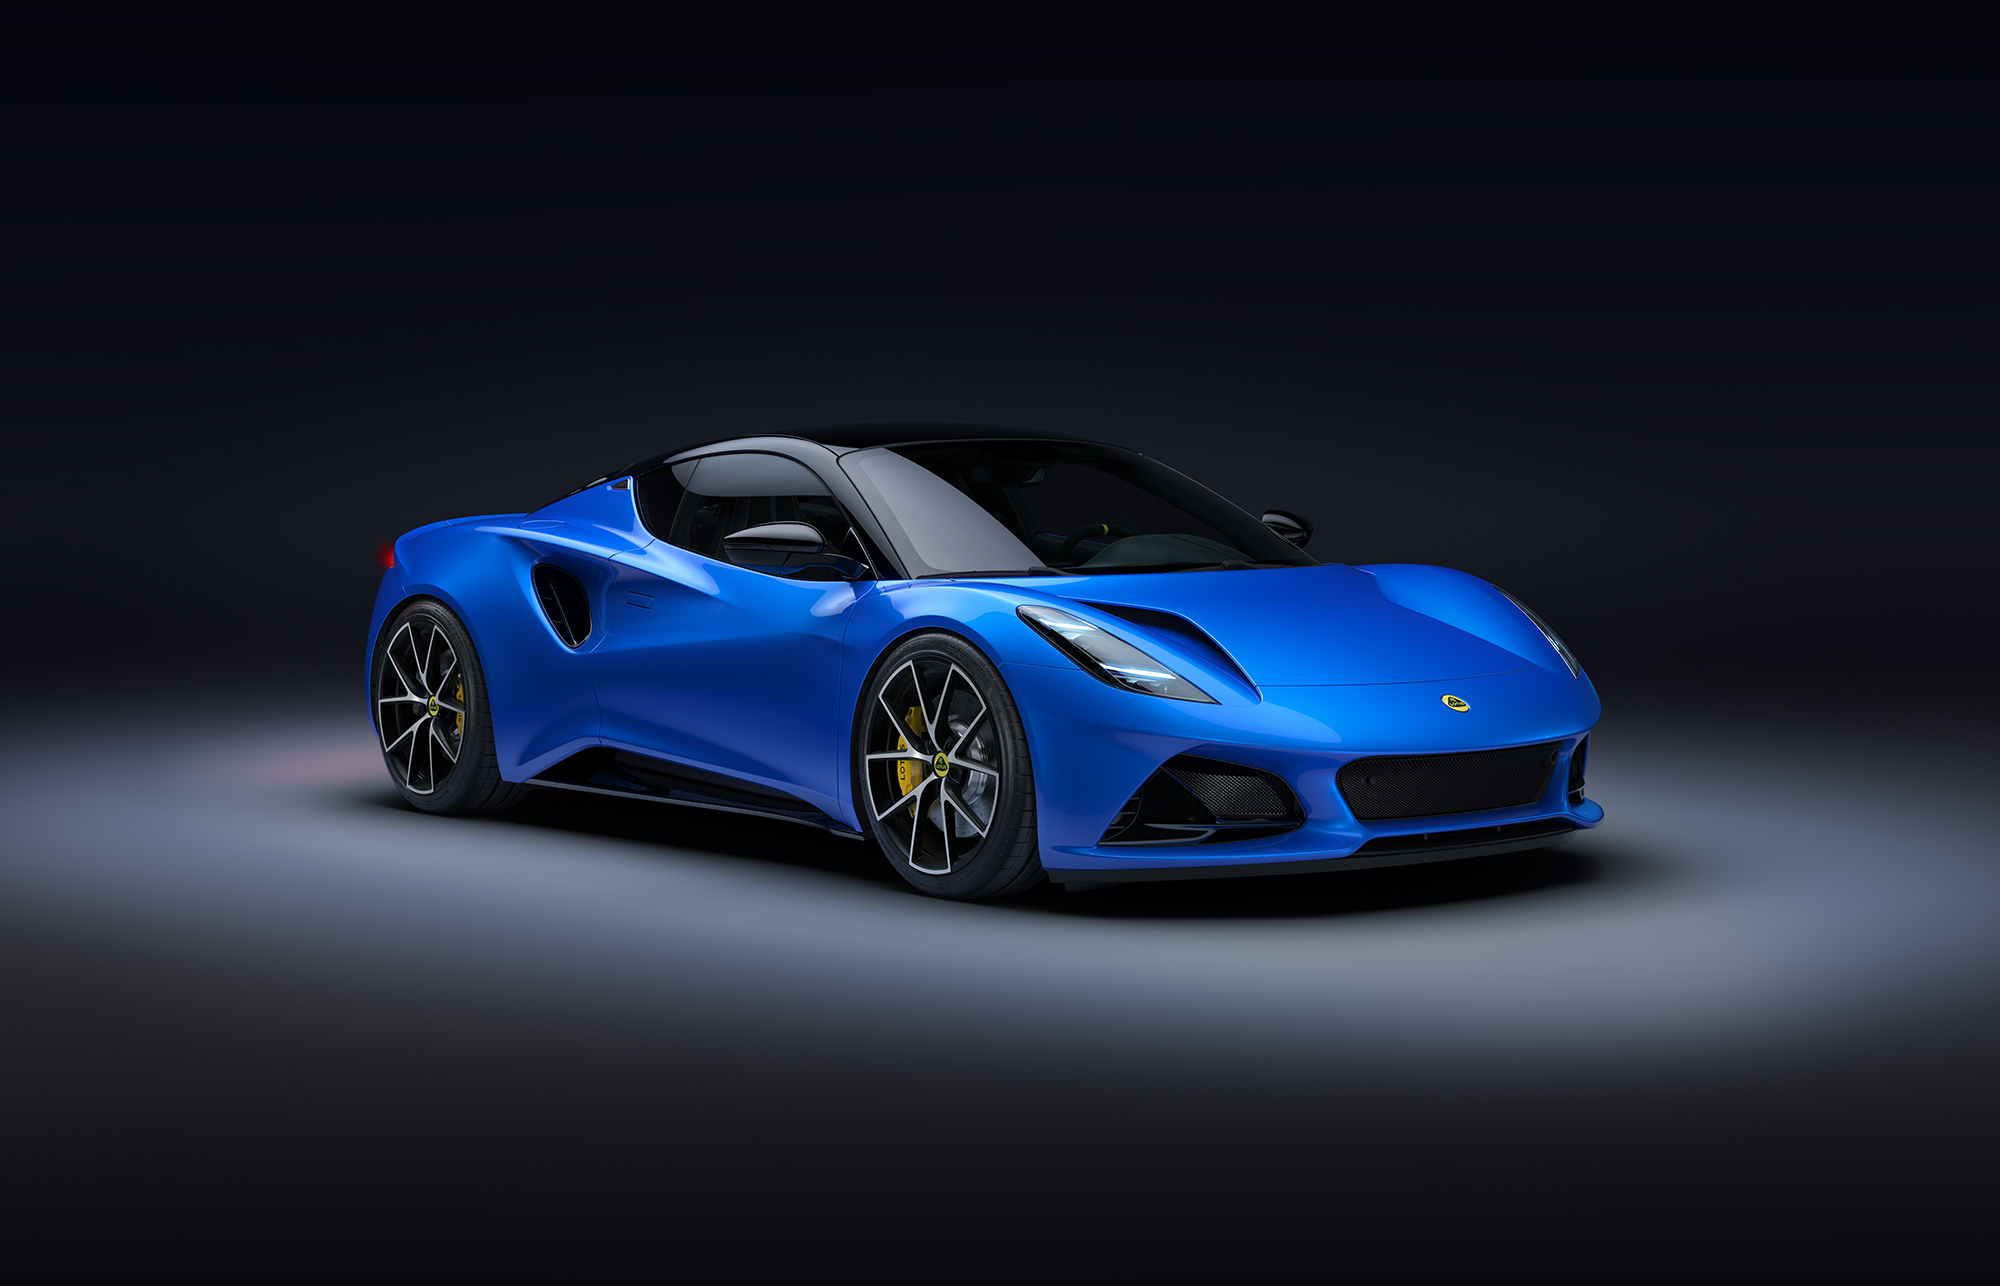 Emira - Lotus Cars Official Website